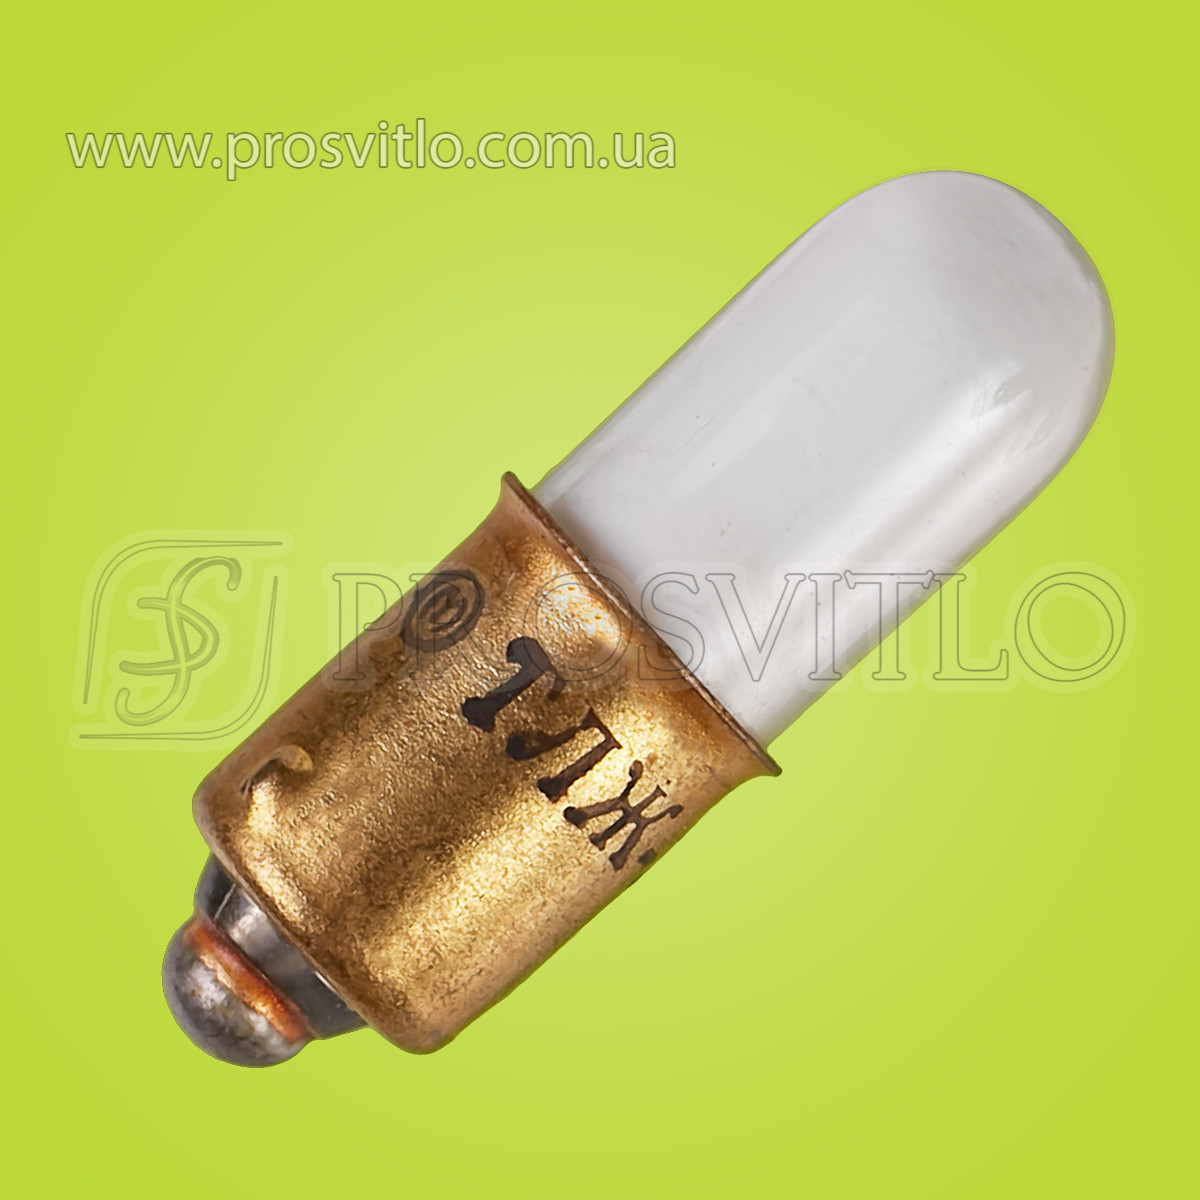 Лампа ТЛЗ 1-2 зеленая Е10, B9s